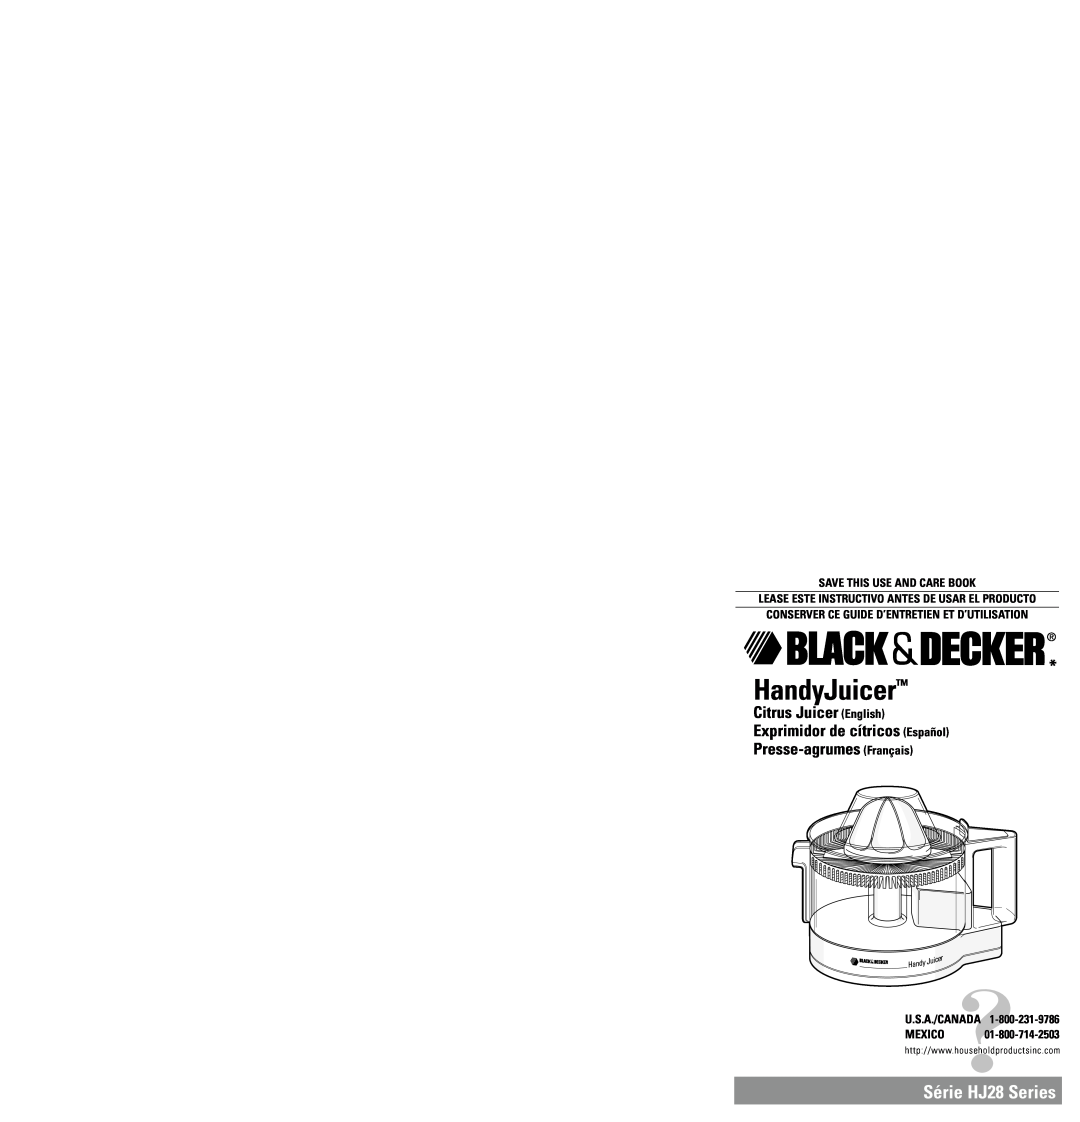 Black & Decker warranty Série HJ28 Series, Mexico, Save This Use And Care Book, HandyJuicer, Presse-agrumes Français 